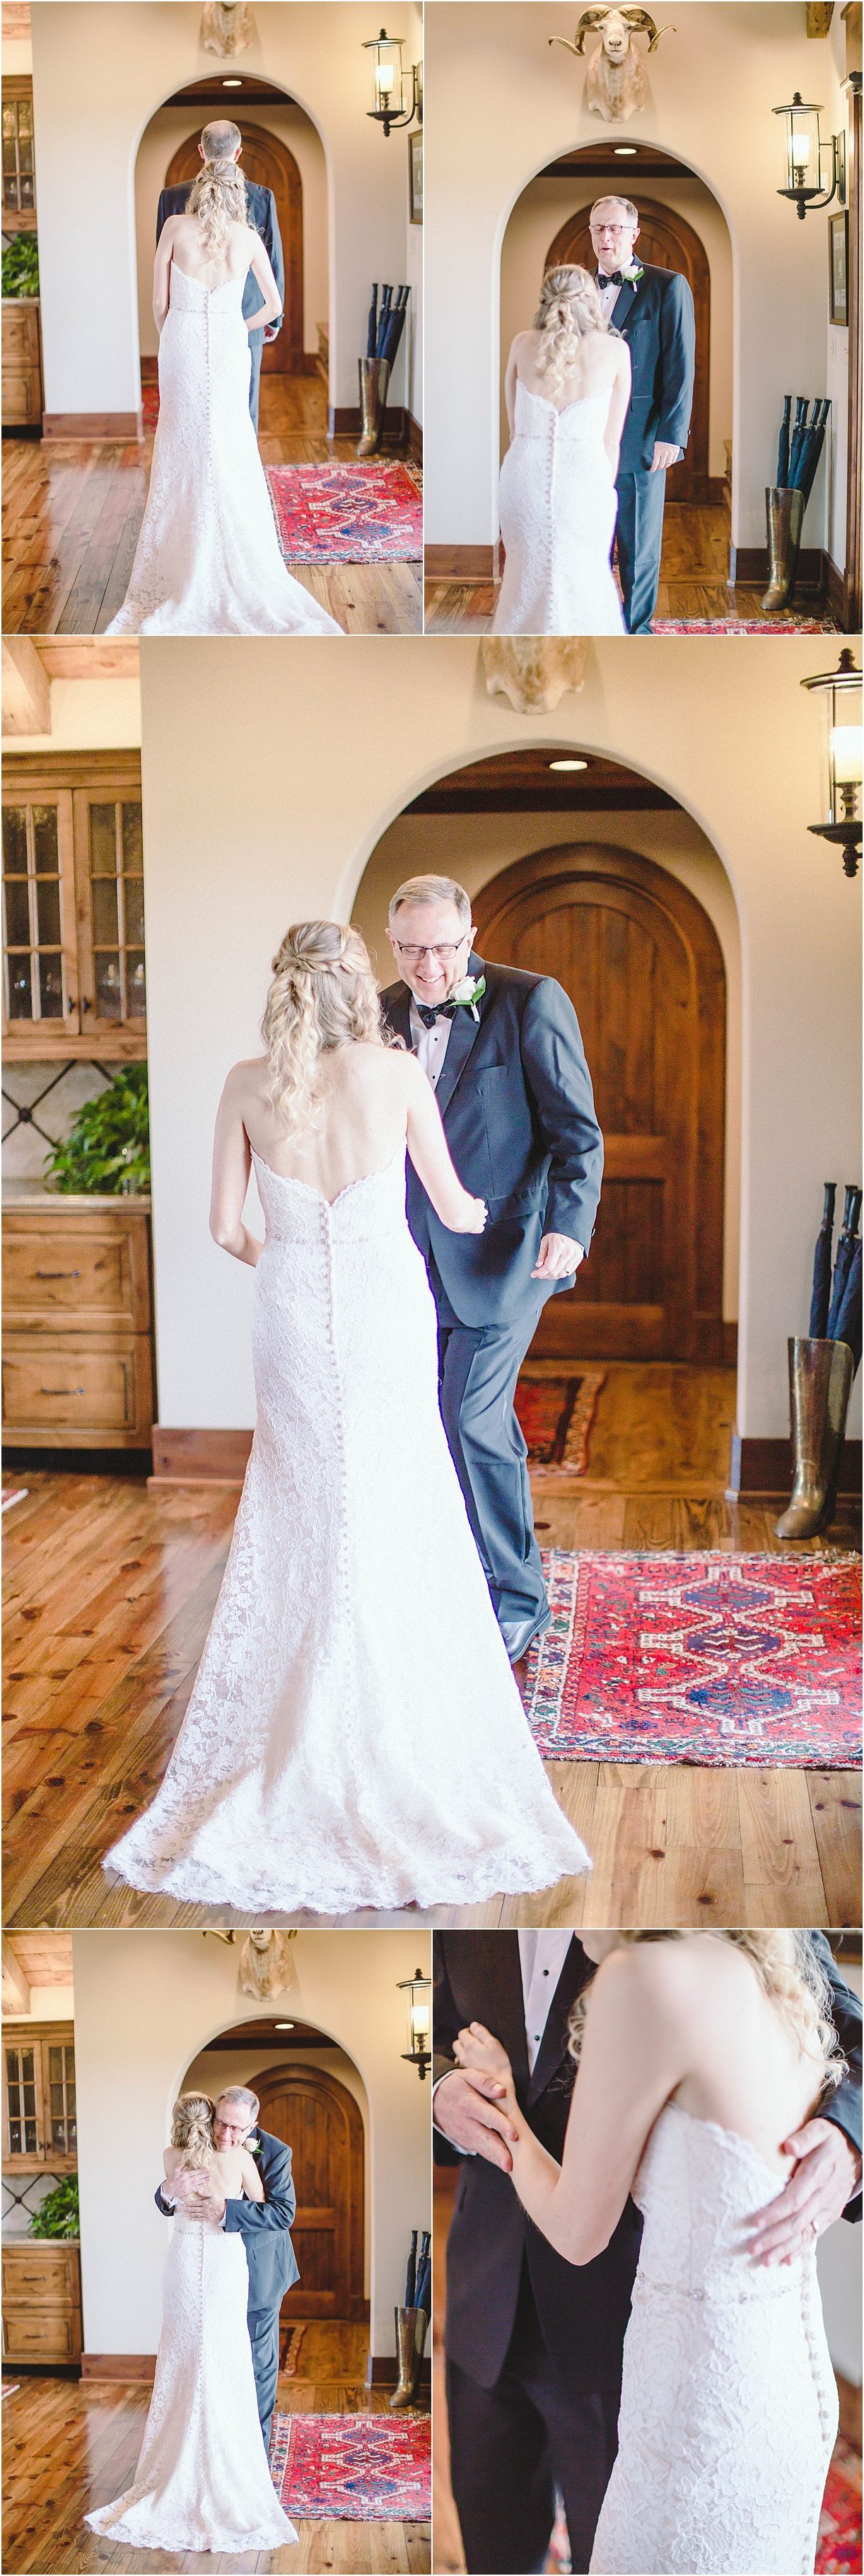 Father First Look Farm Wedding with DIY Details | Hill City Bride Virginia Wedding Blog